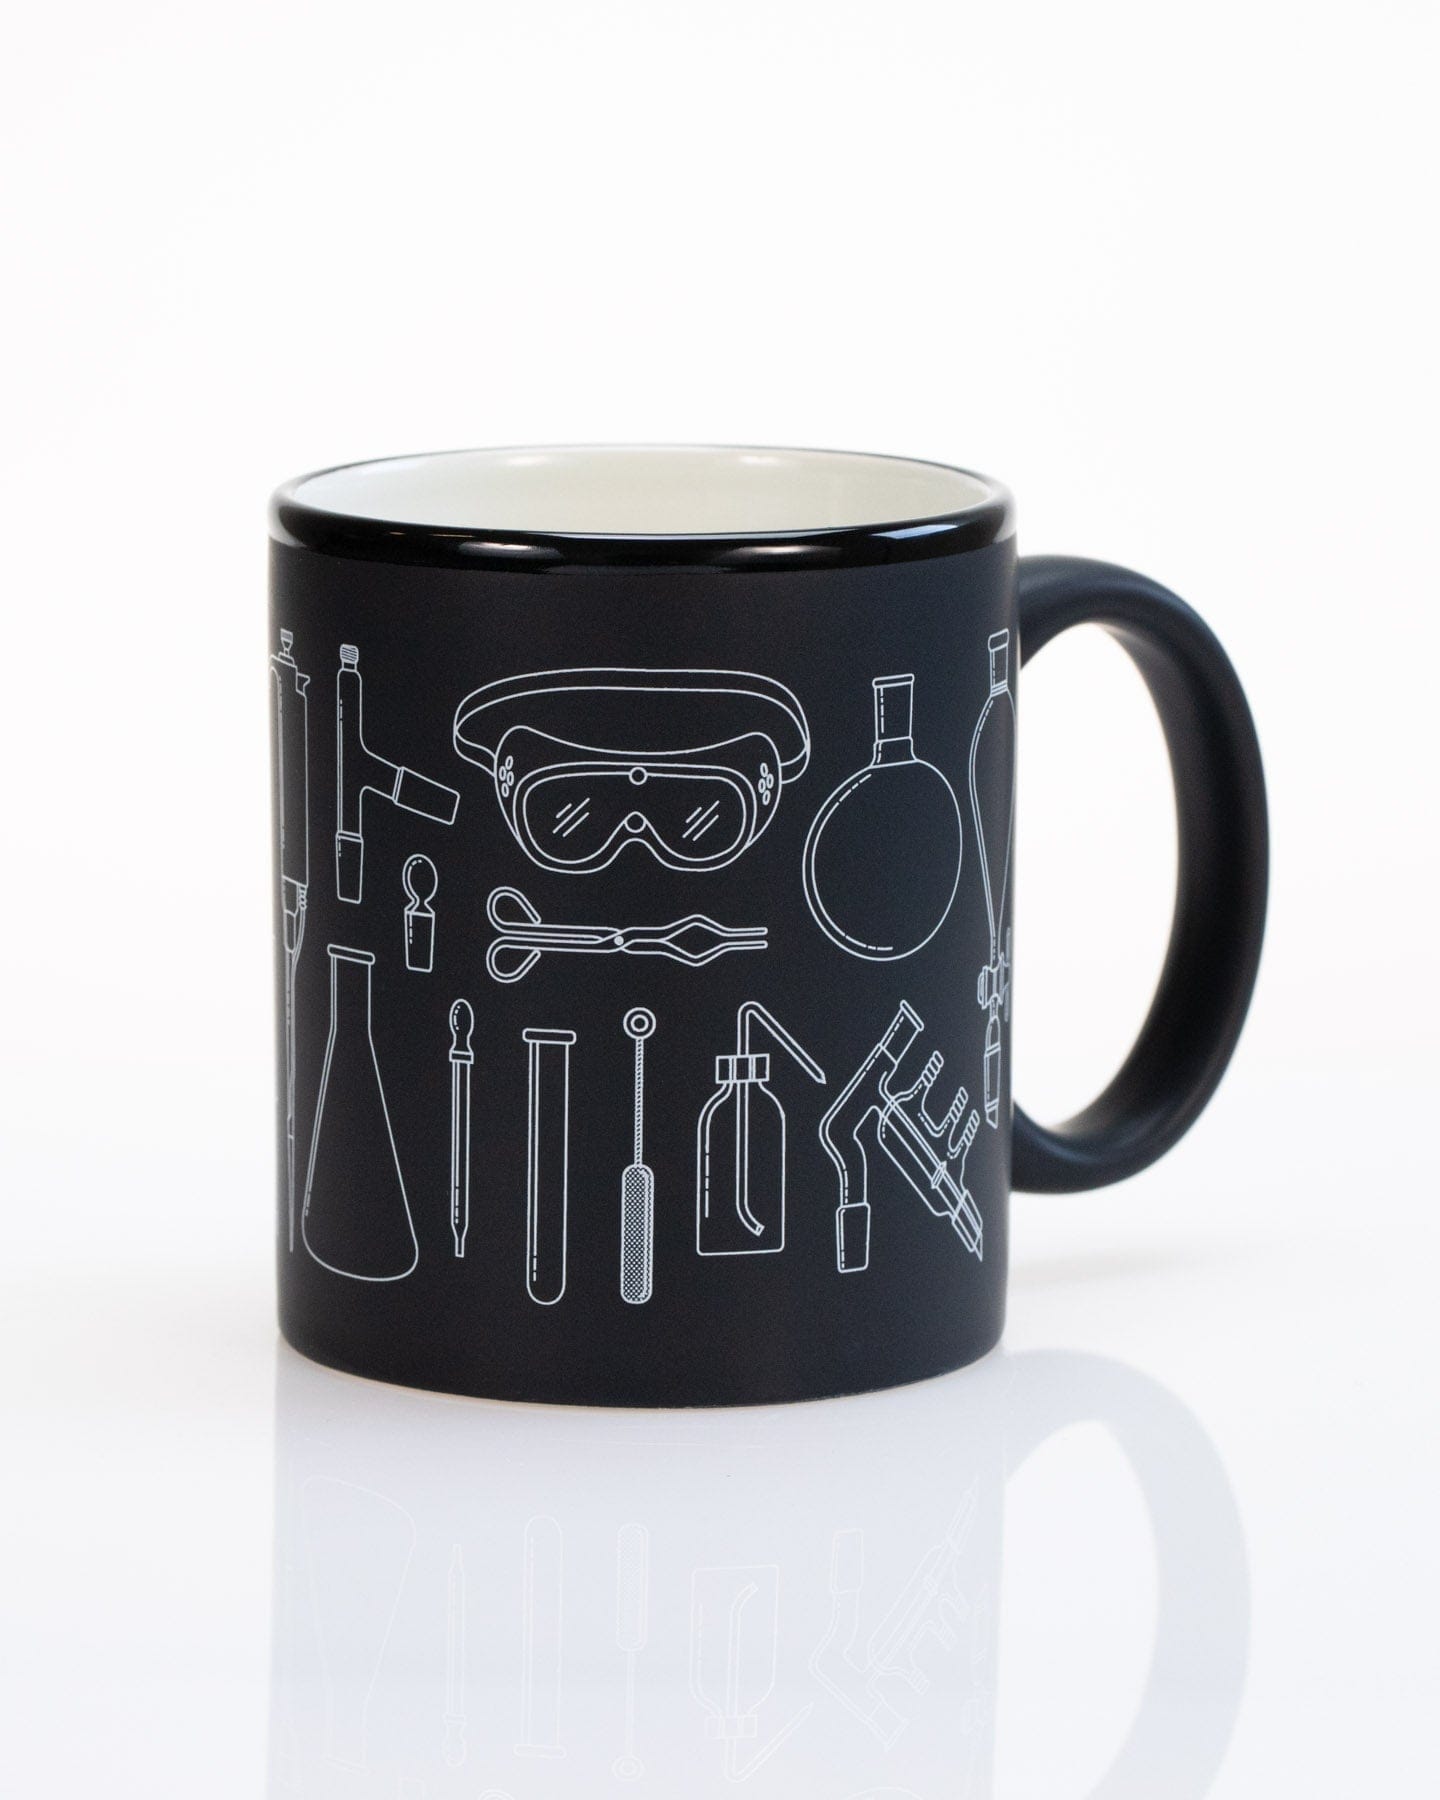 Star Wars 11 oz Coffee Mugs Set of 4 - USA ONLY